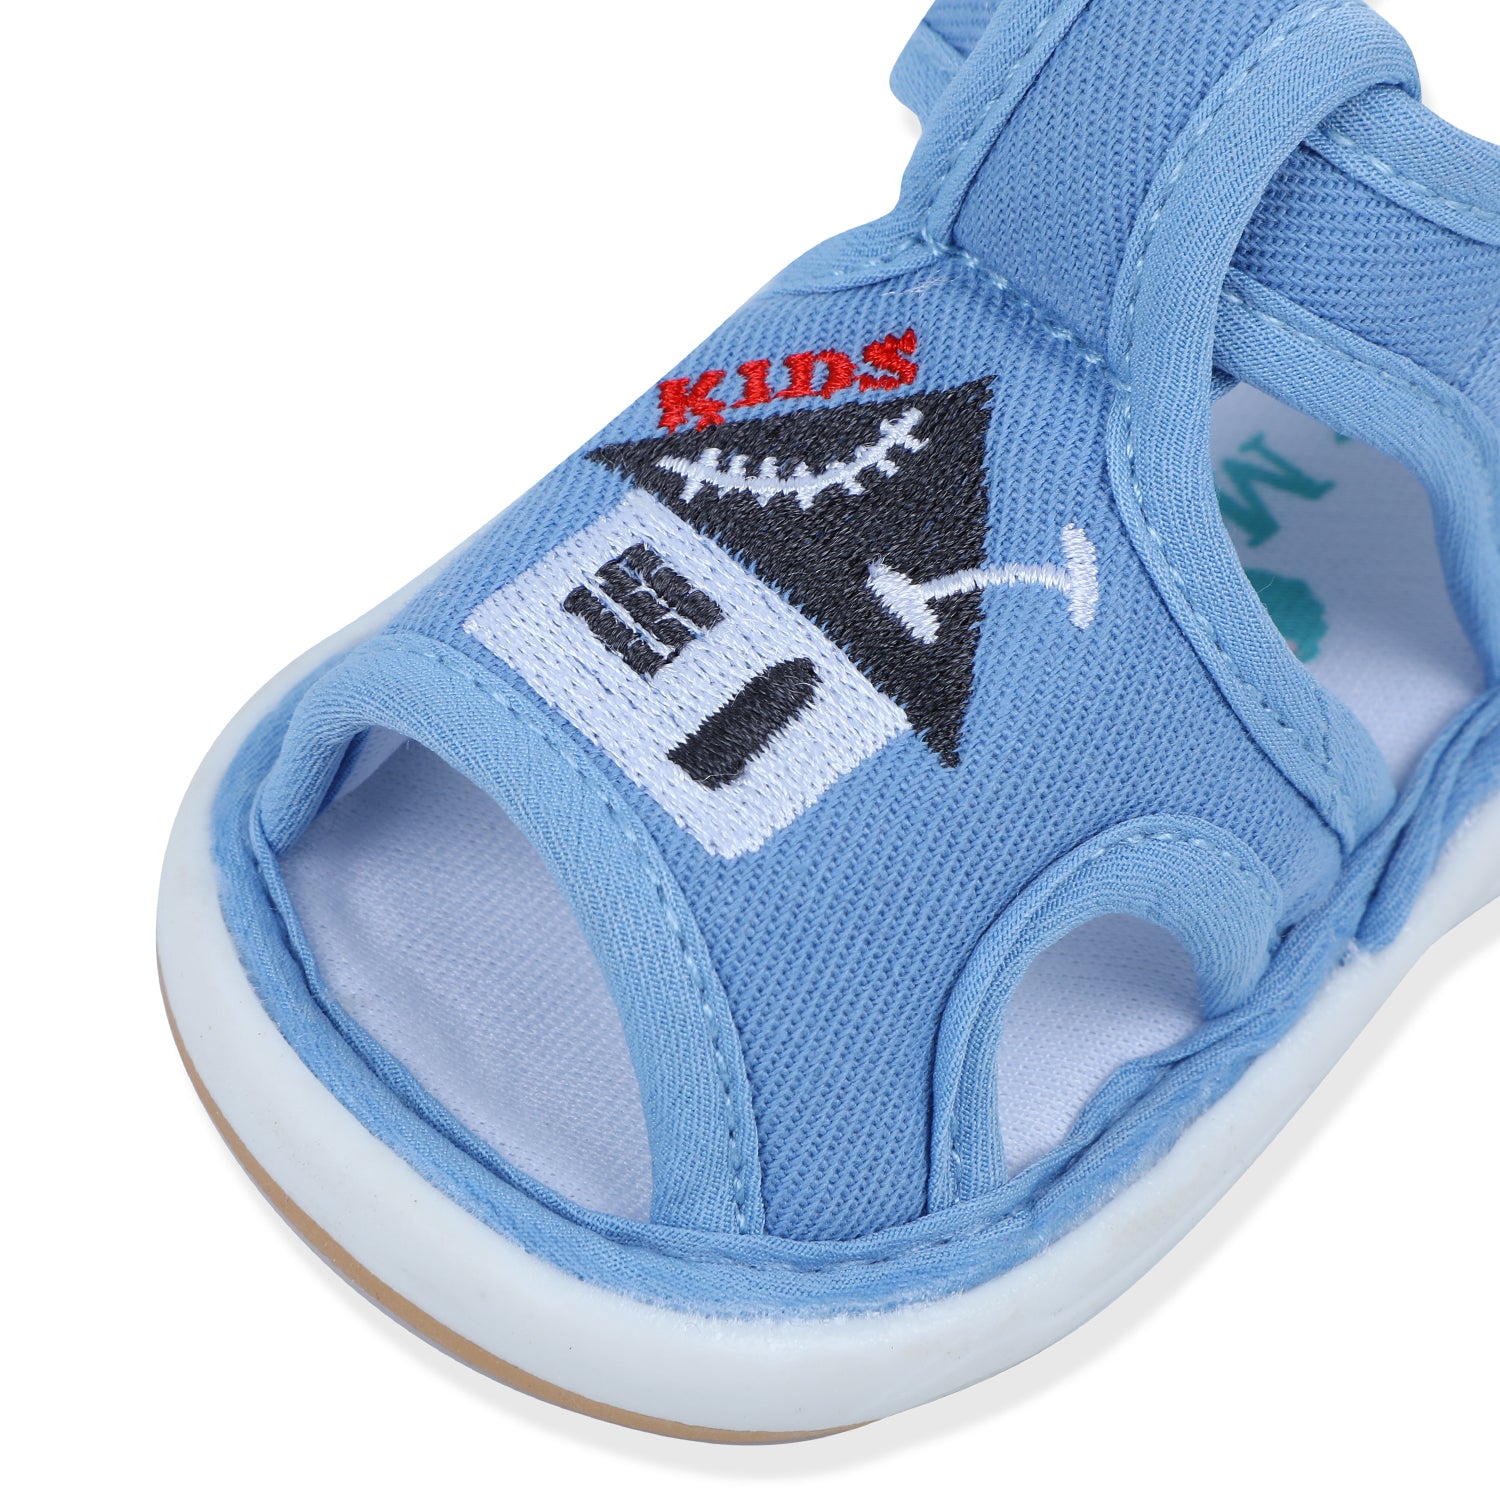 Nike | Shoes | Nike Sunray Baby Toddler Boys Sandals Size 78 Blue  Lightweight Comfortable | Poshmark